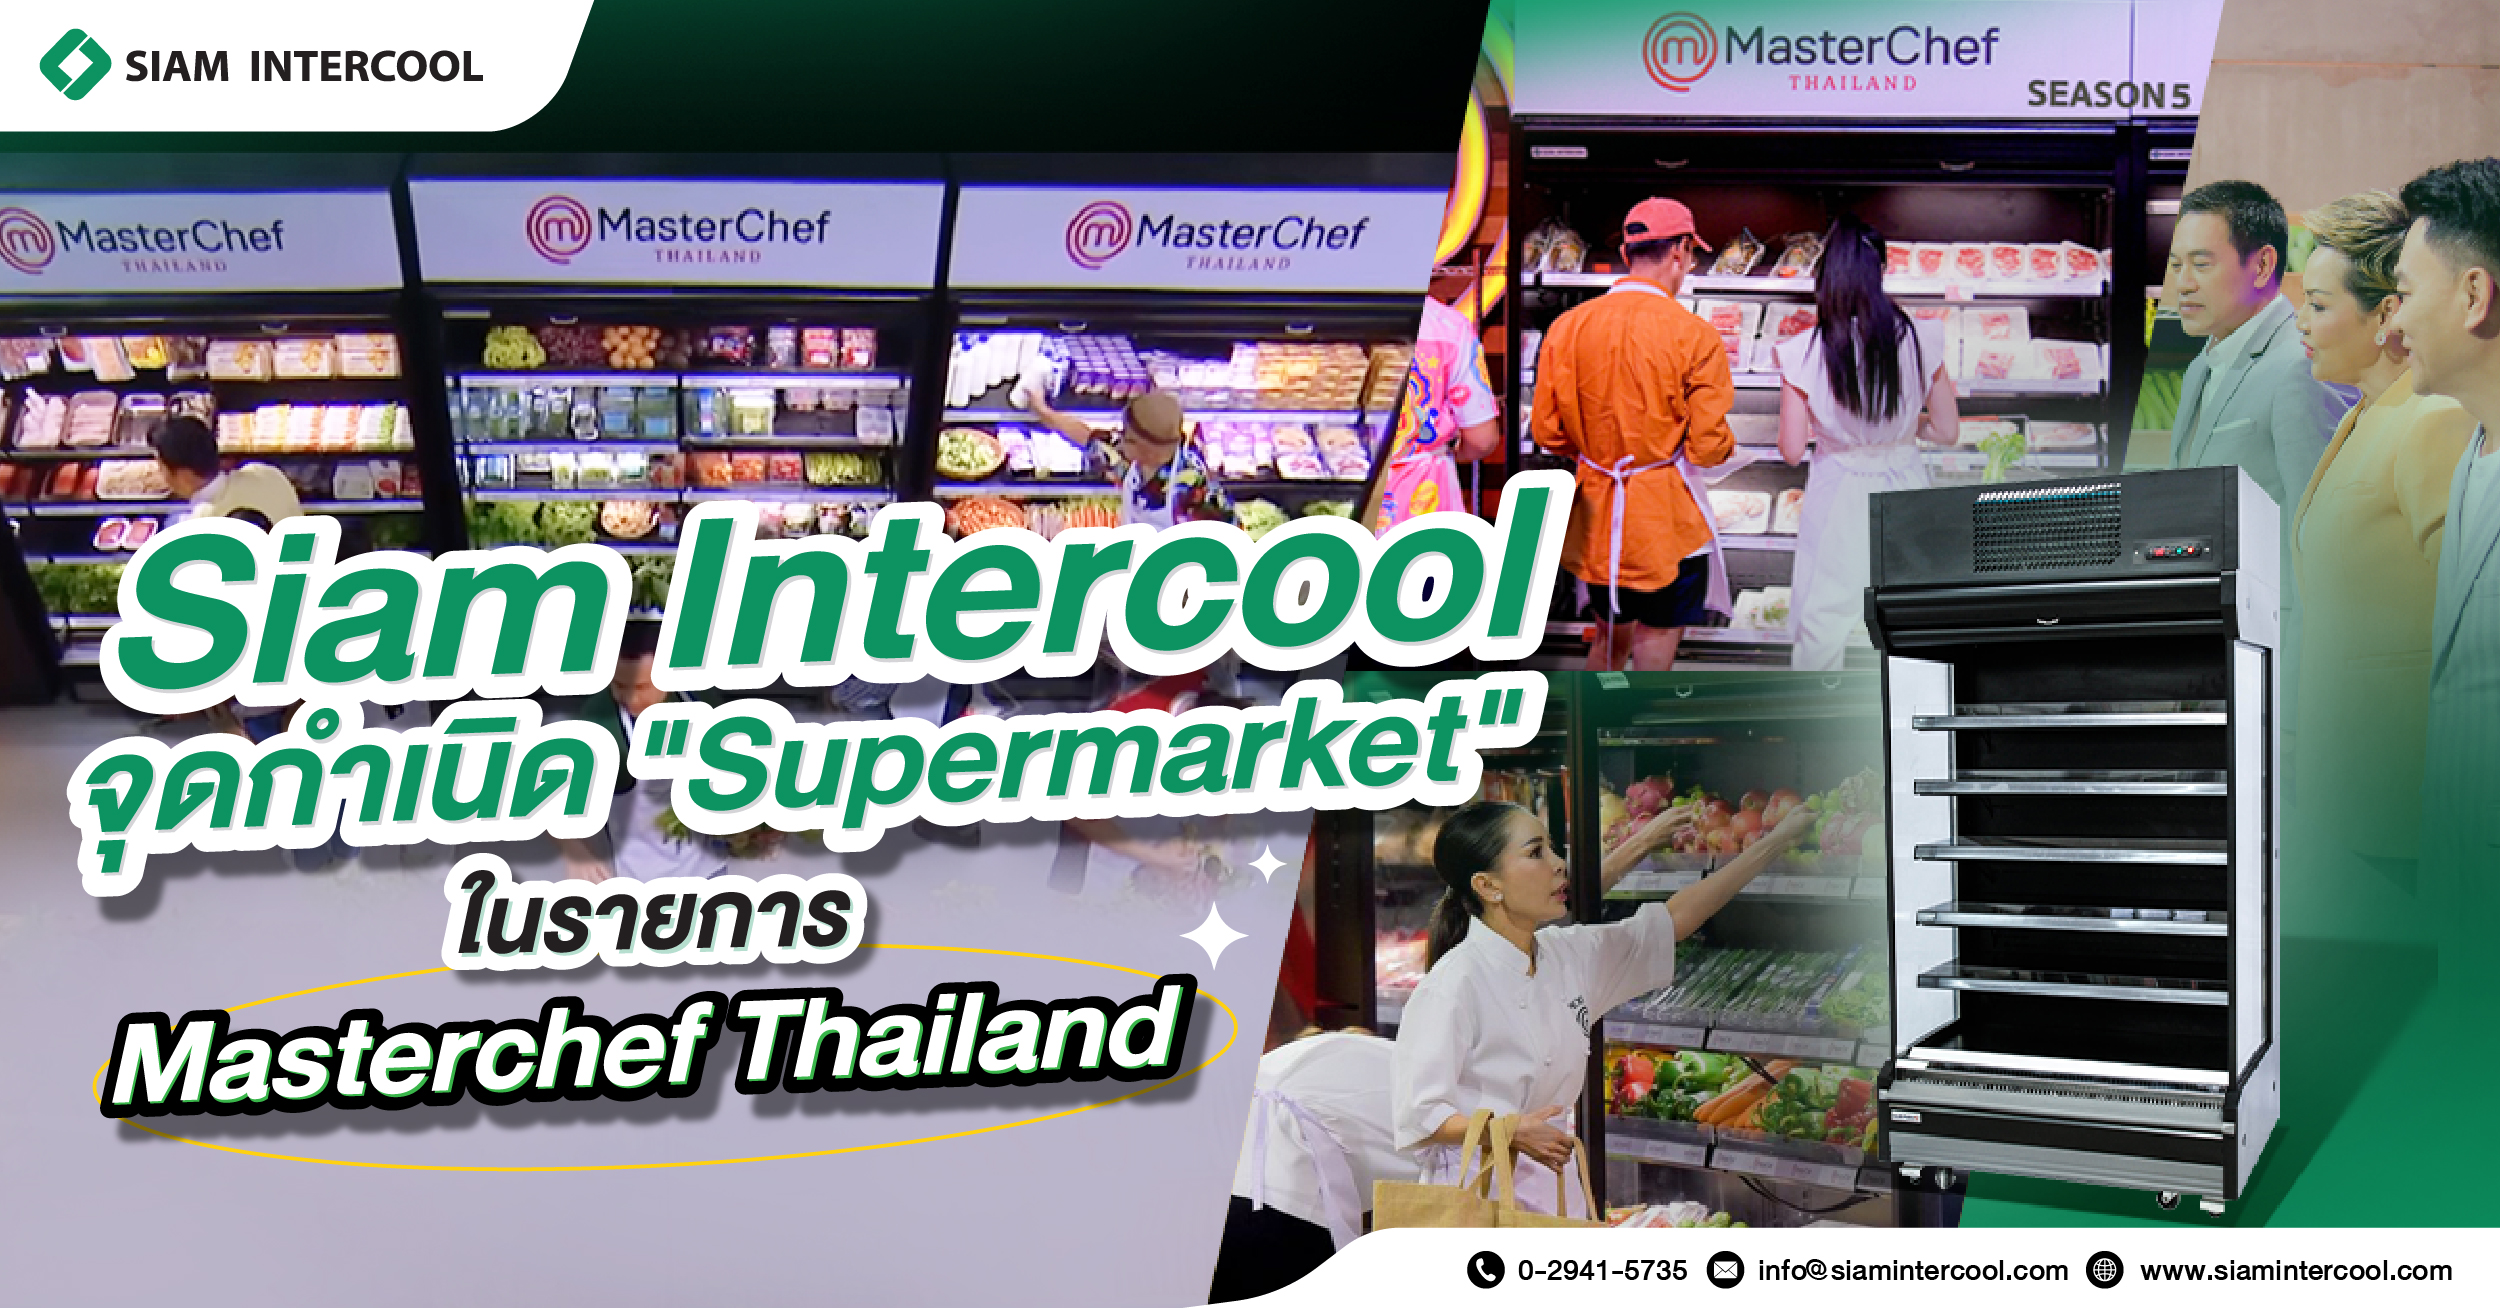 Siam Intercool ผู้นำด้านตู้แช่ จุดกำเนิด "ซูเปอร์มาร์เก็ต" ในรายการ มาสเตอร์เชฟ